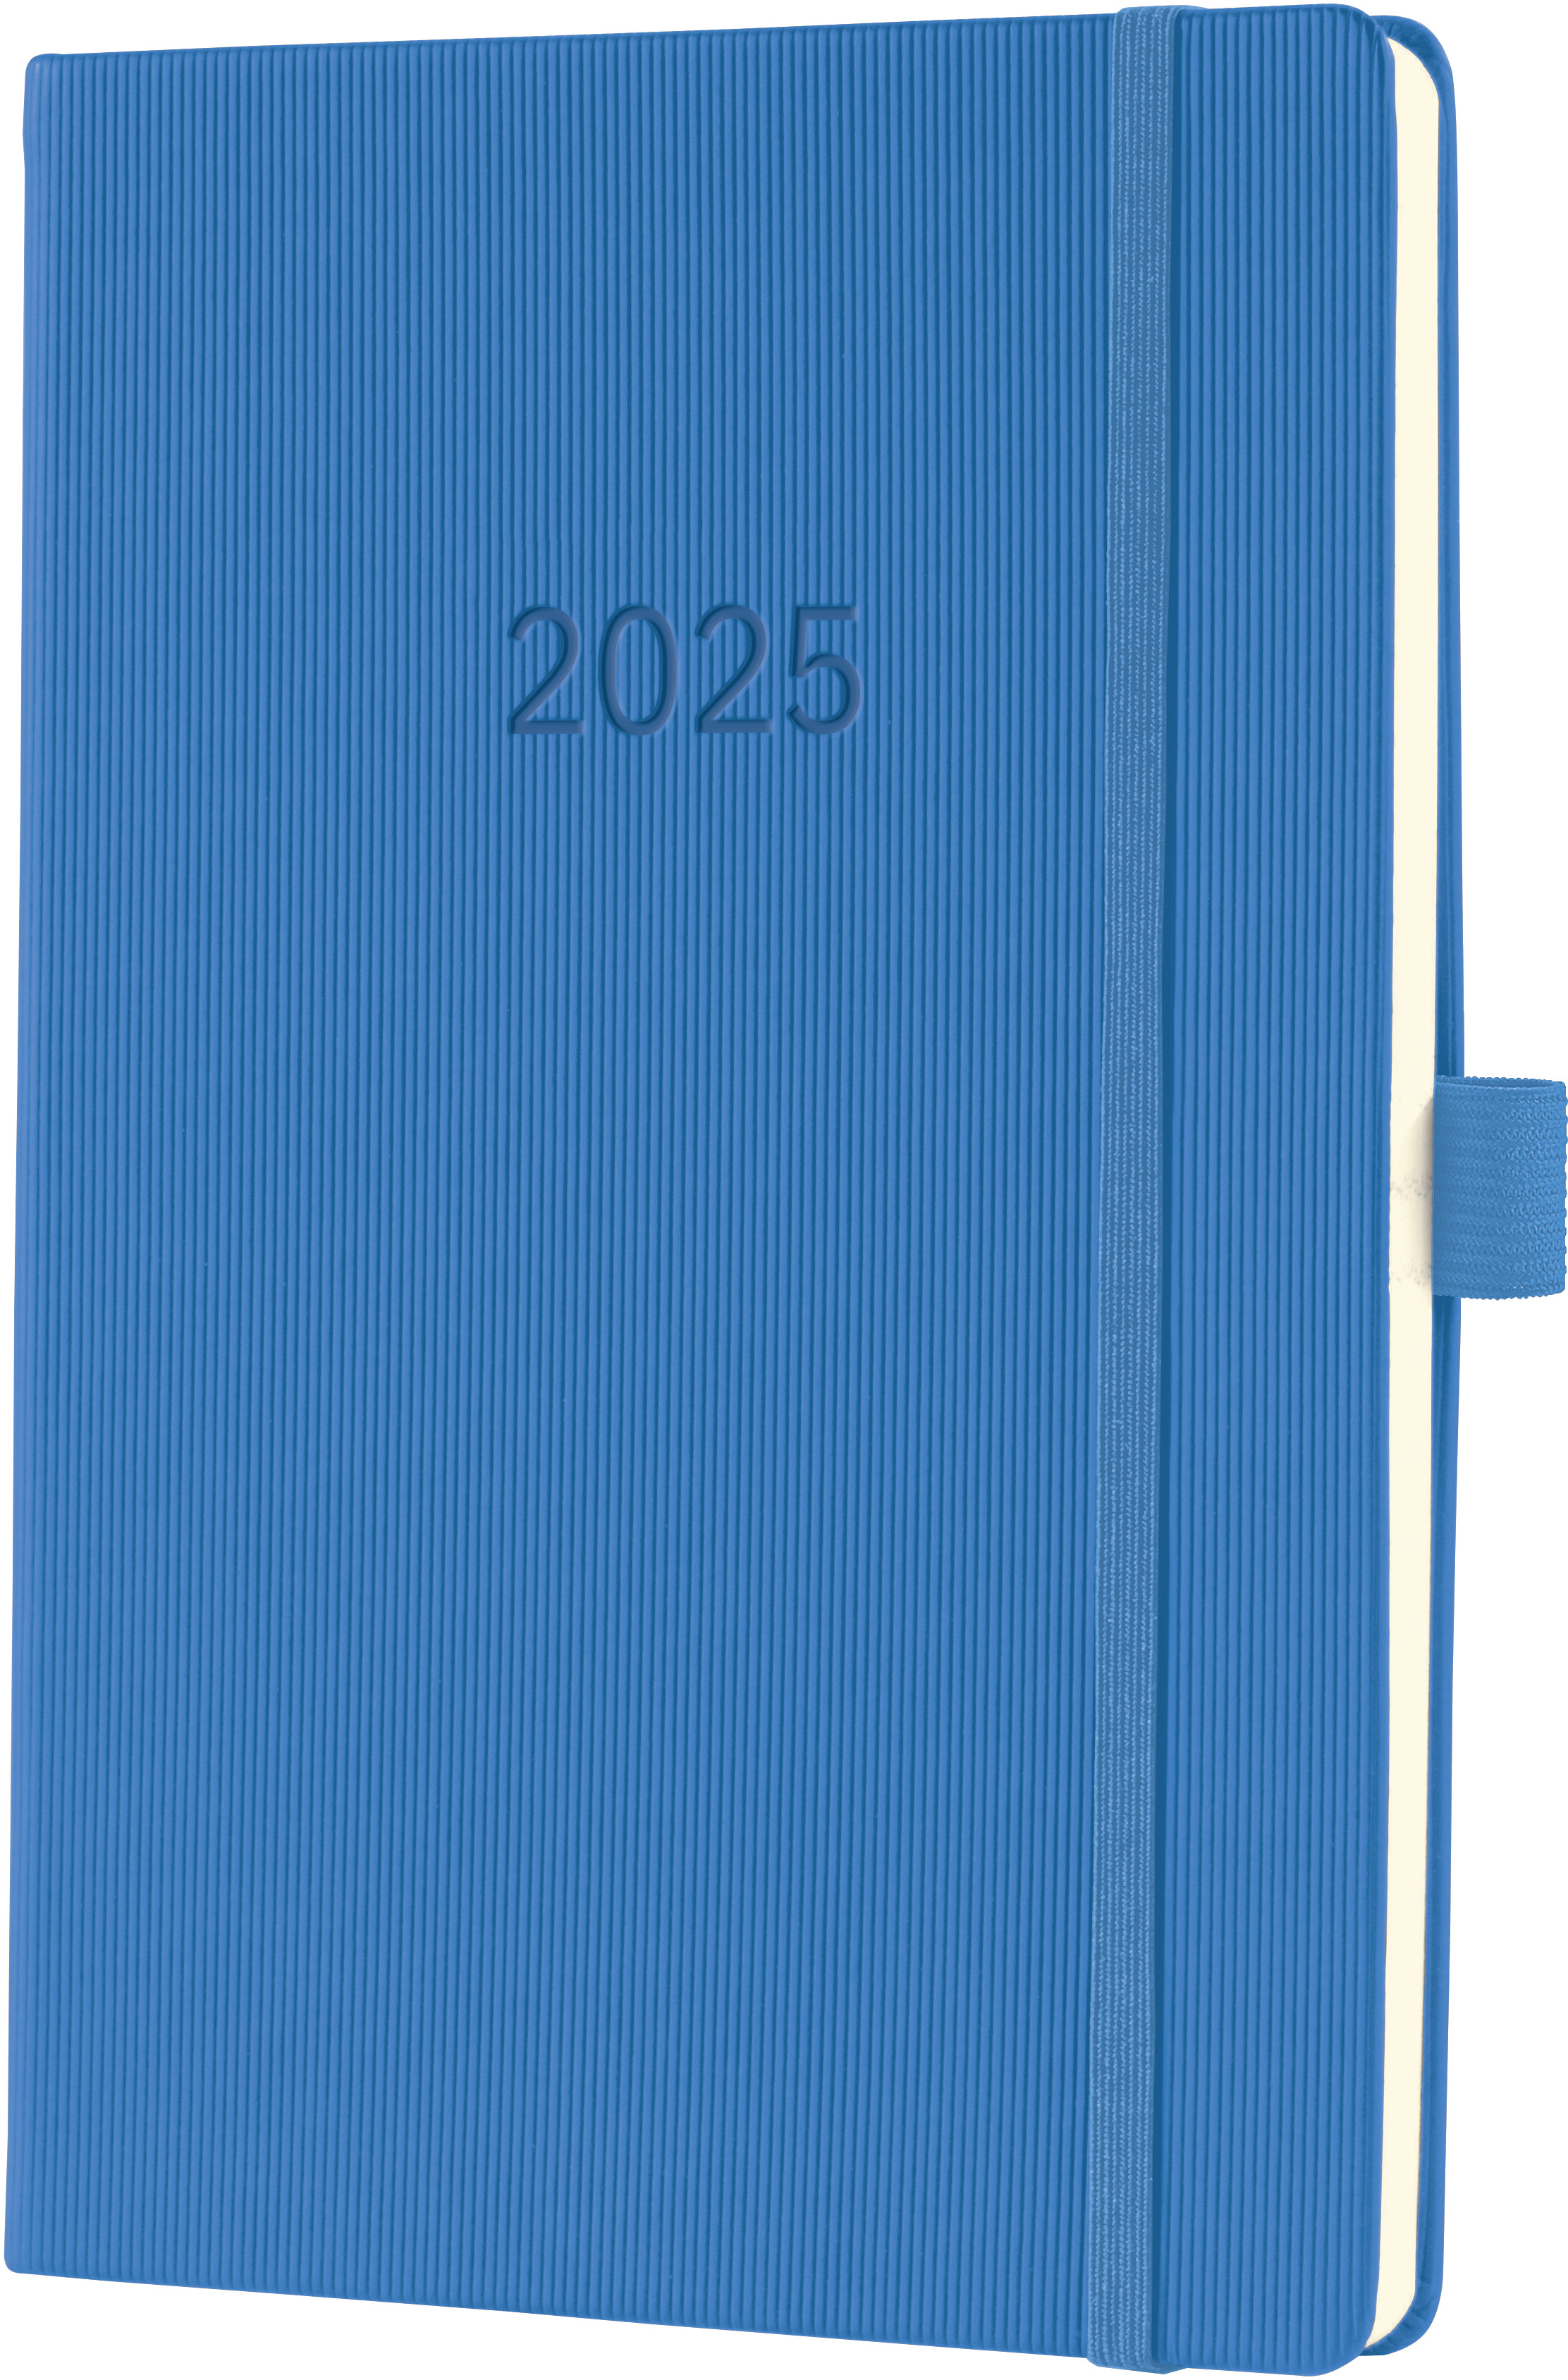 CONCEPTUM Calendrier semainier 2025 C2568 1S/2P bleu 21.3x14.8cm 1S/2P bleu 21.3x14.8cm